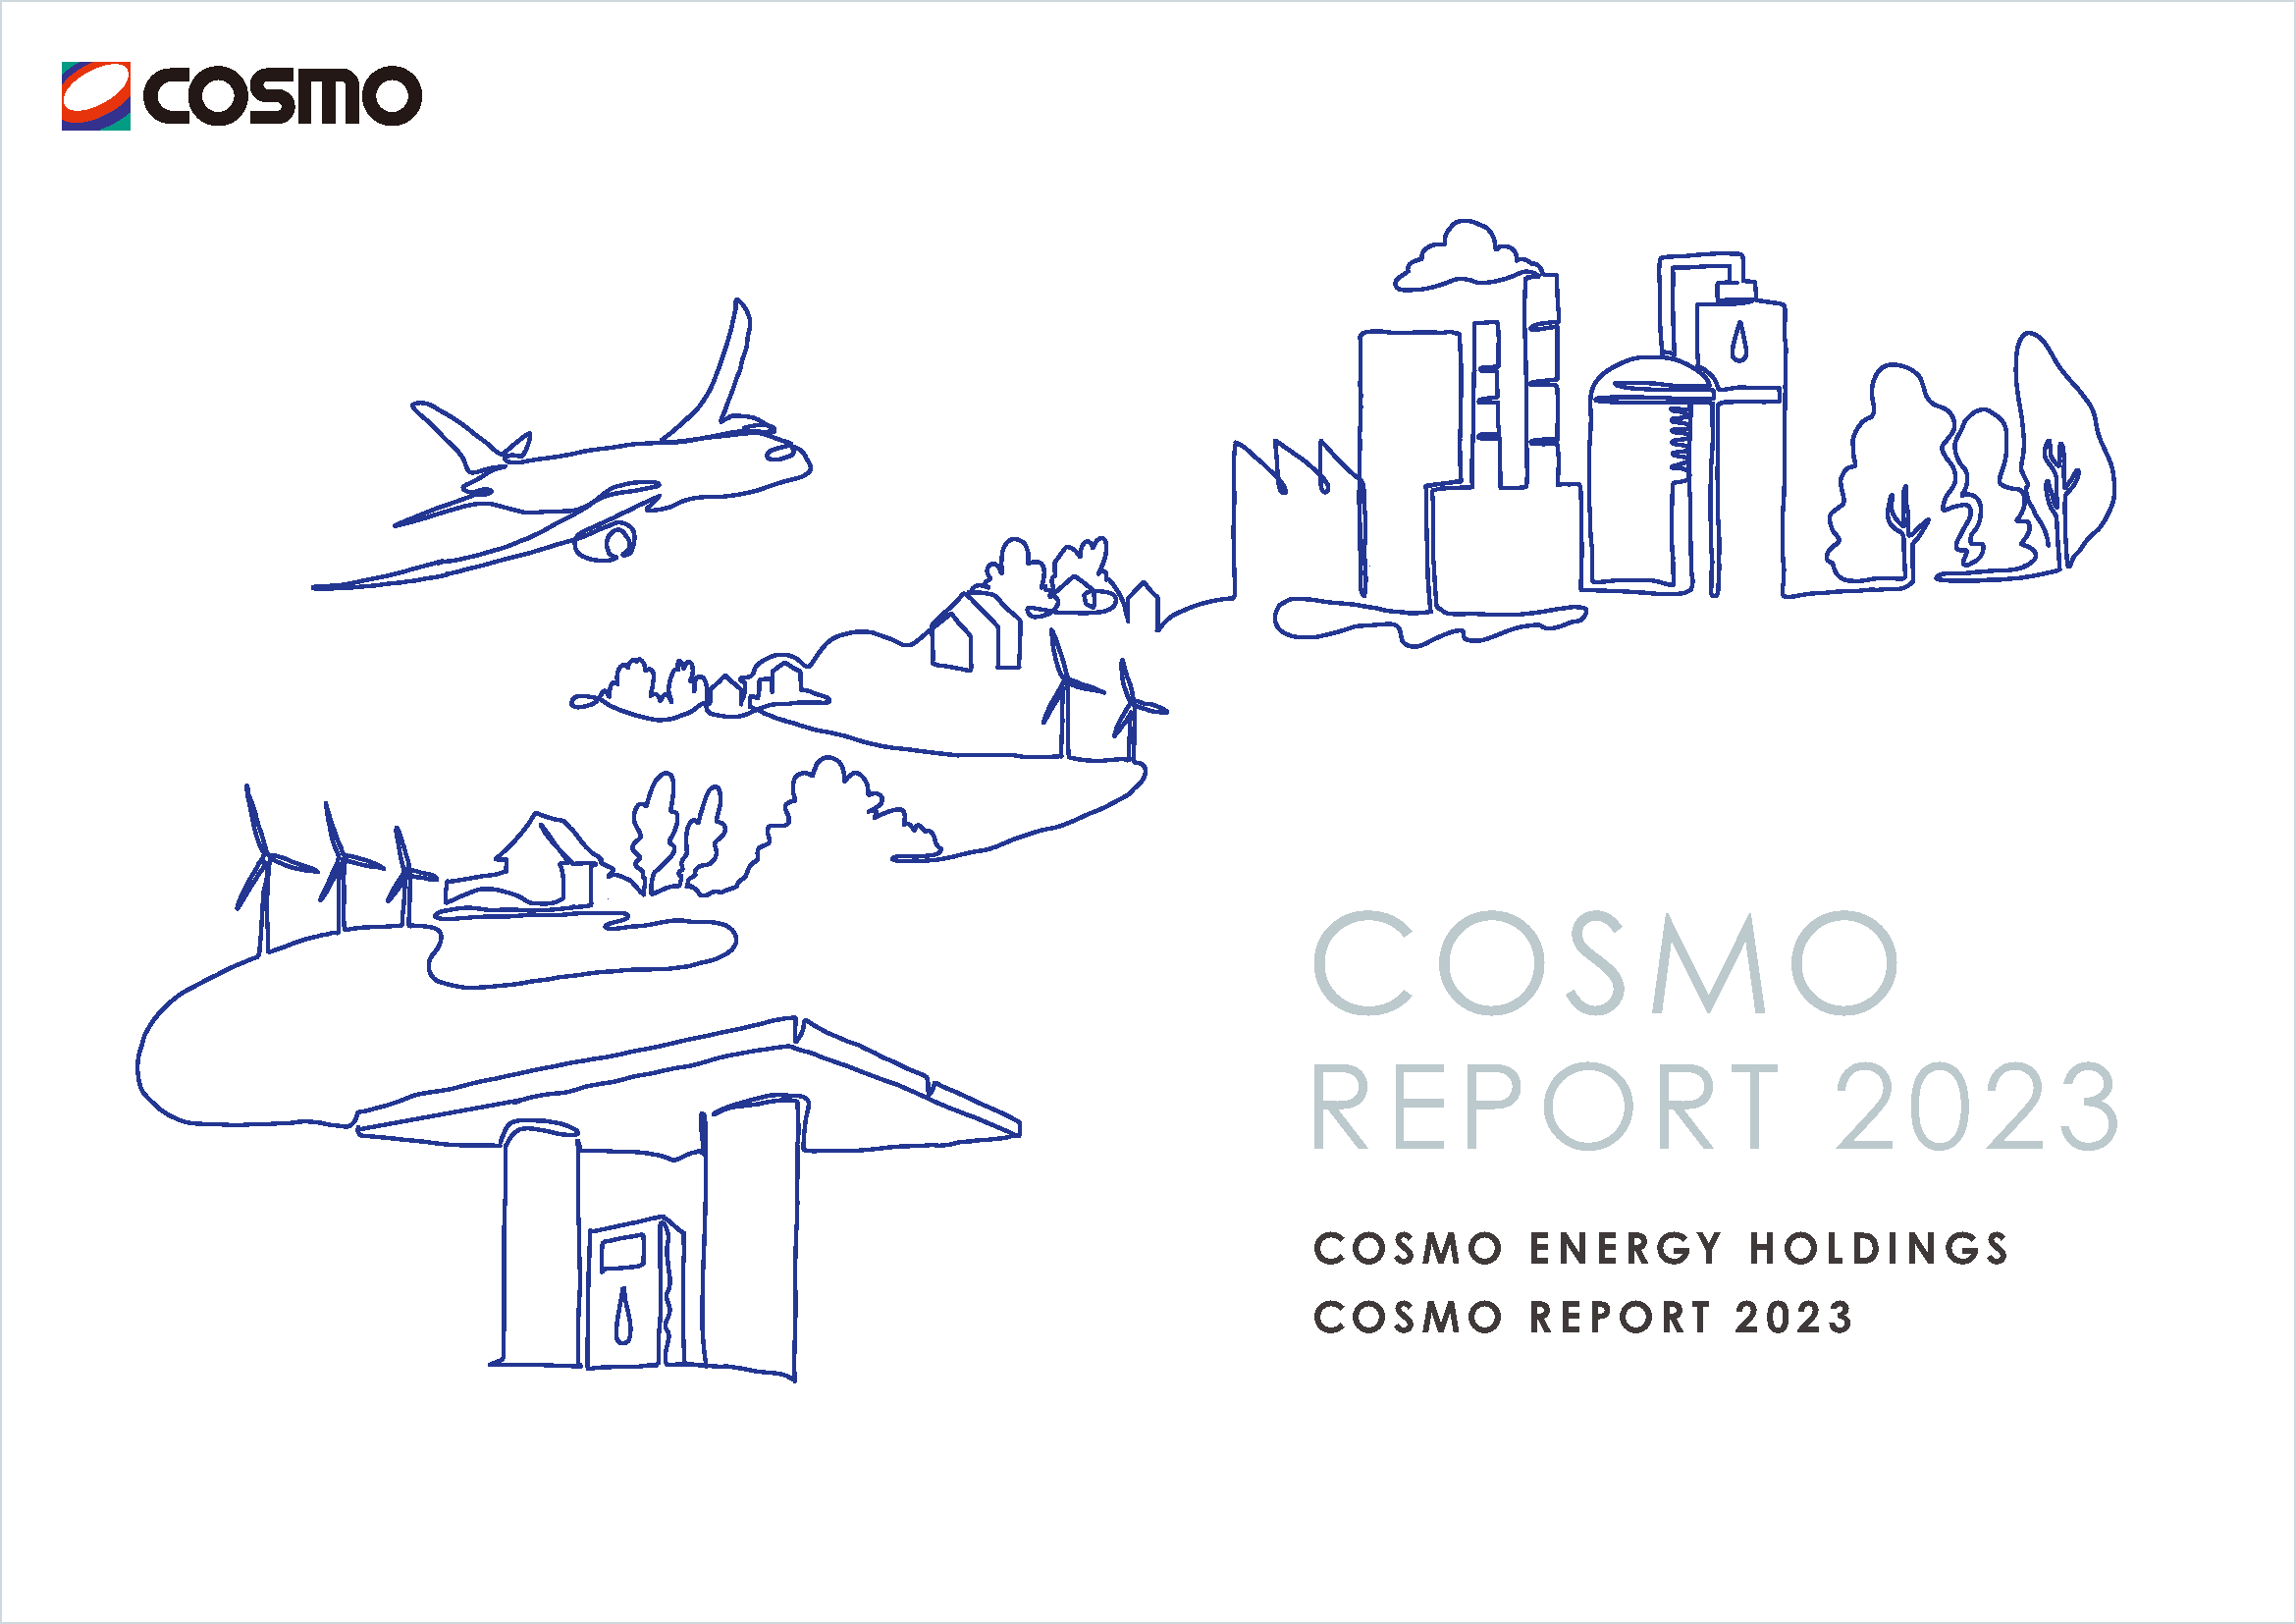 COSMO REPORT 2023